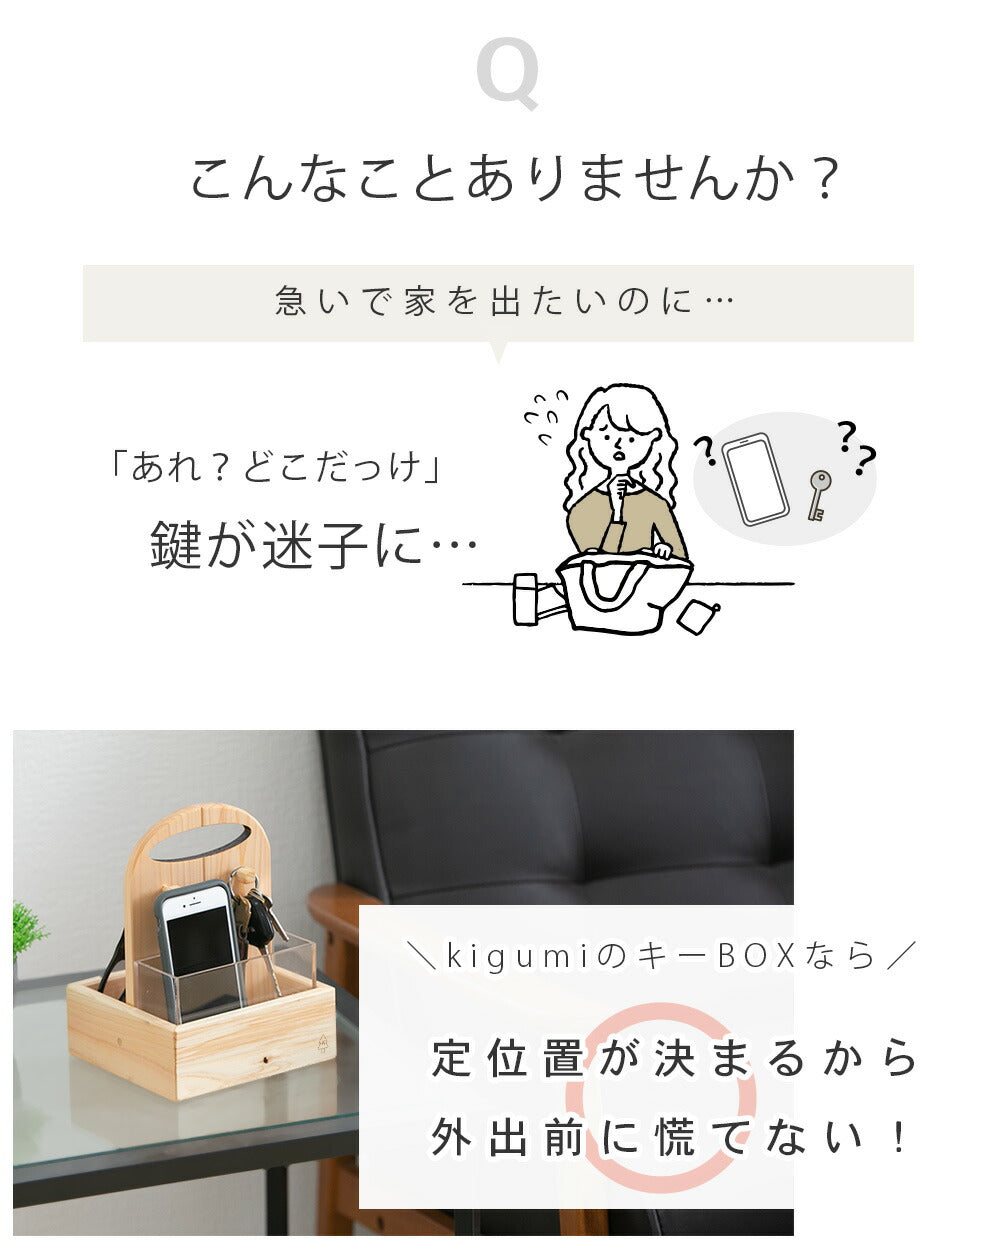 kigumi portable key box